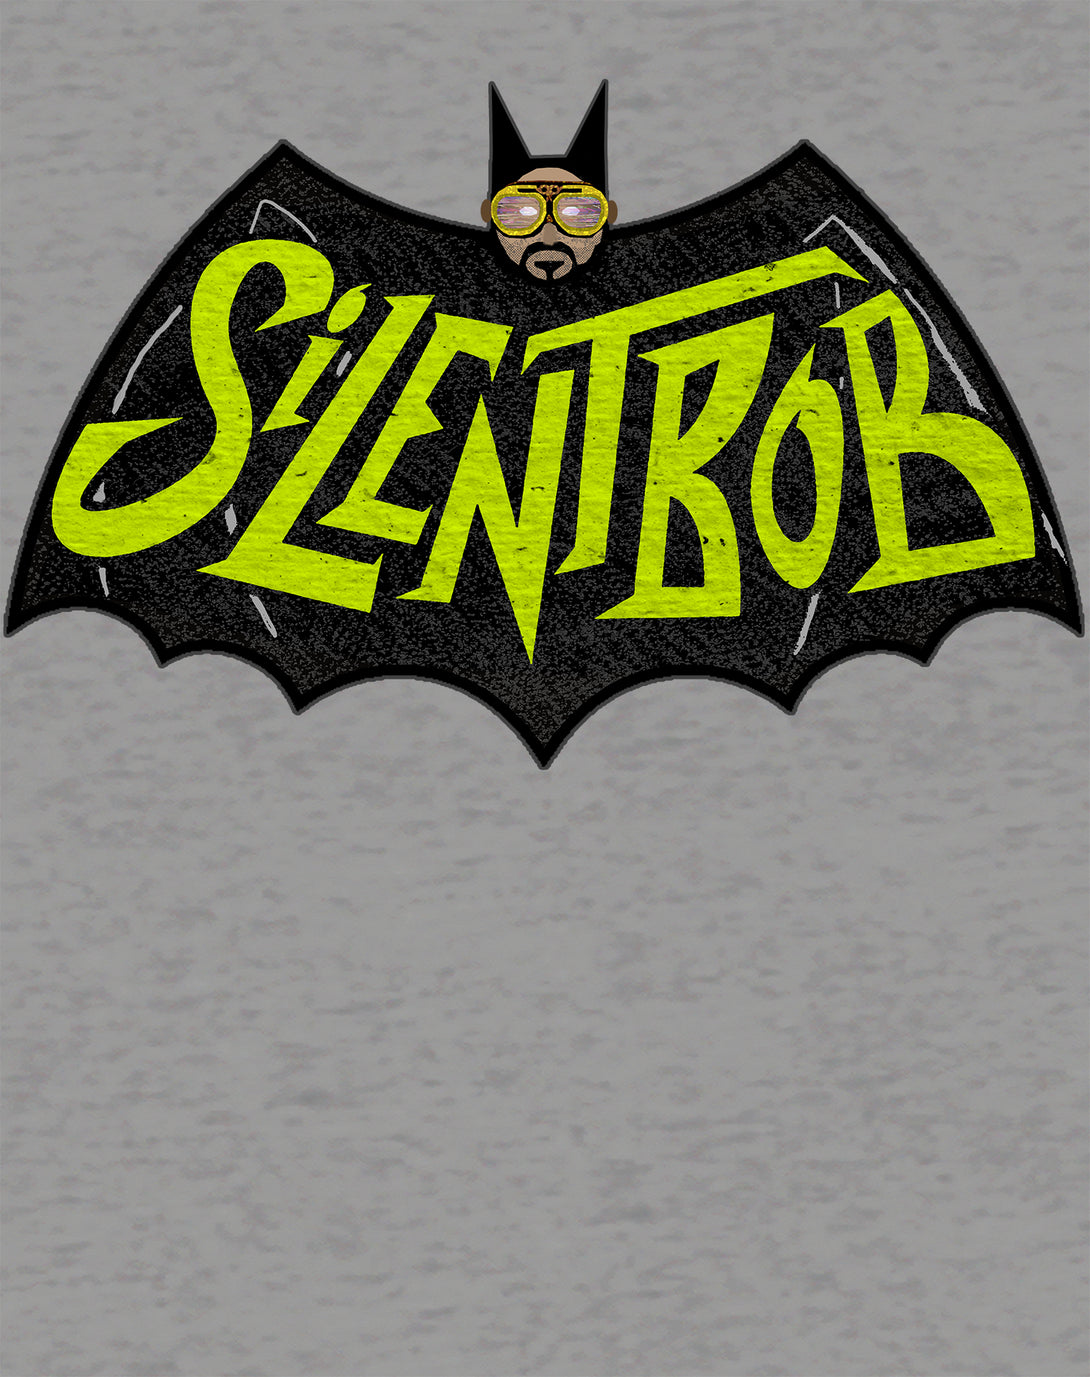 Kevin Smith View Askewniverse Logo Silent Bat Bob Official Men's T-Shirt Sports Grey - Urban Species Design Close Up